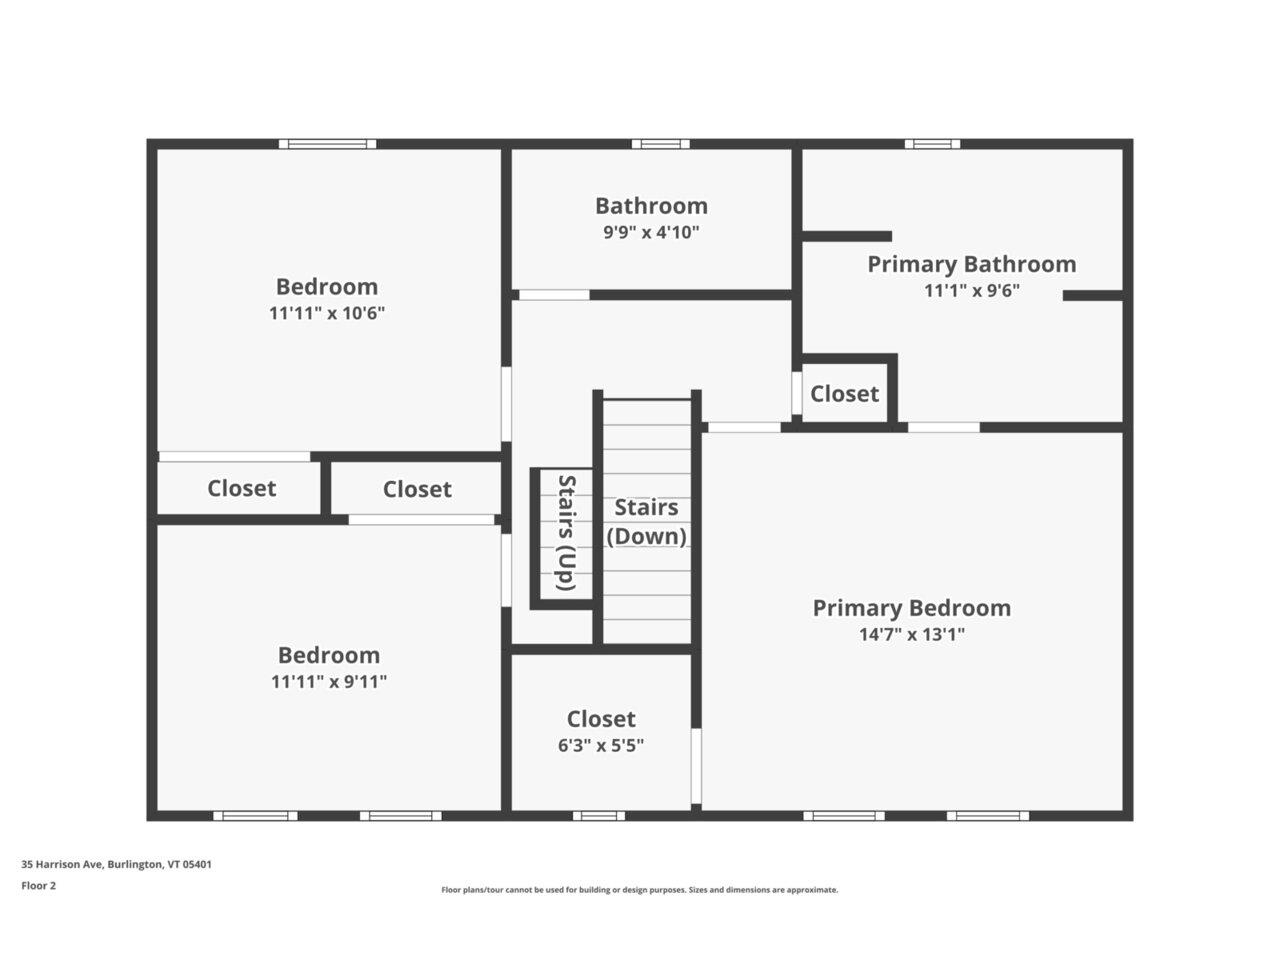 Floor Plan - Second Level